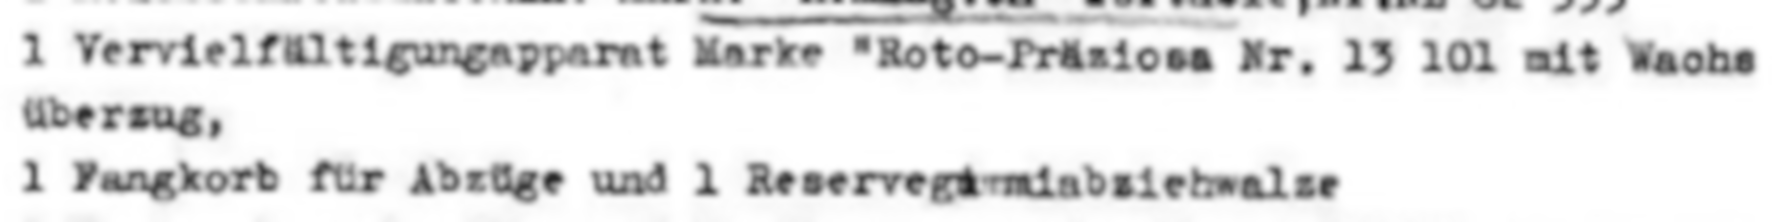 Auszug aus dem Suchungsbericht 21.2.1943